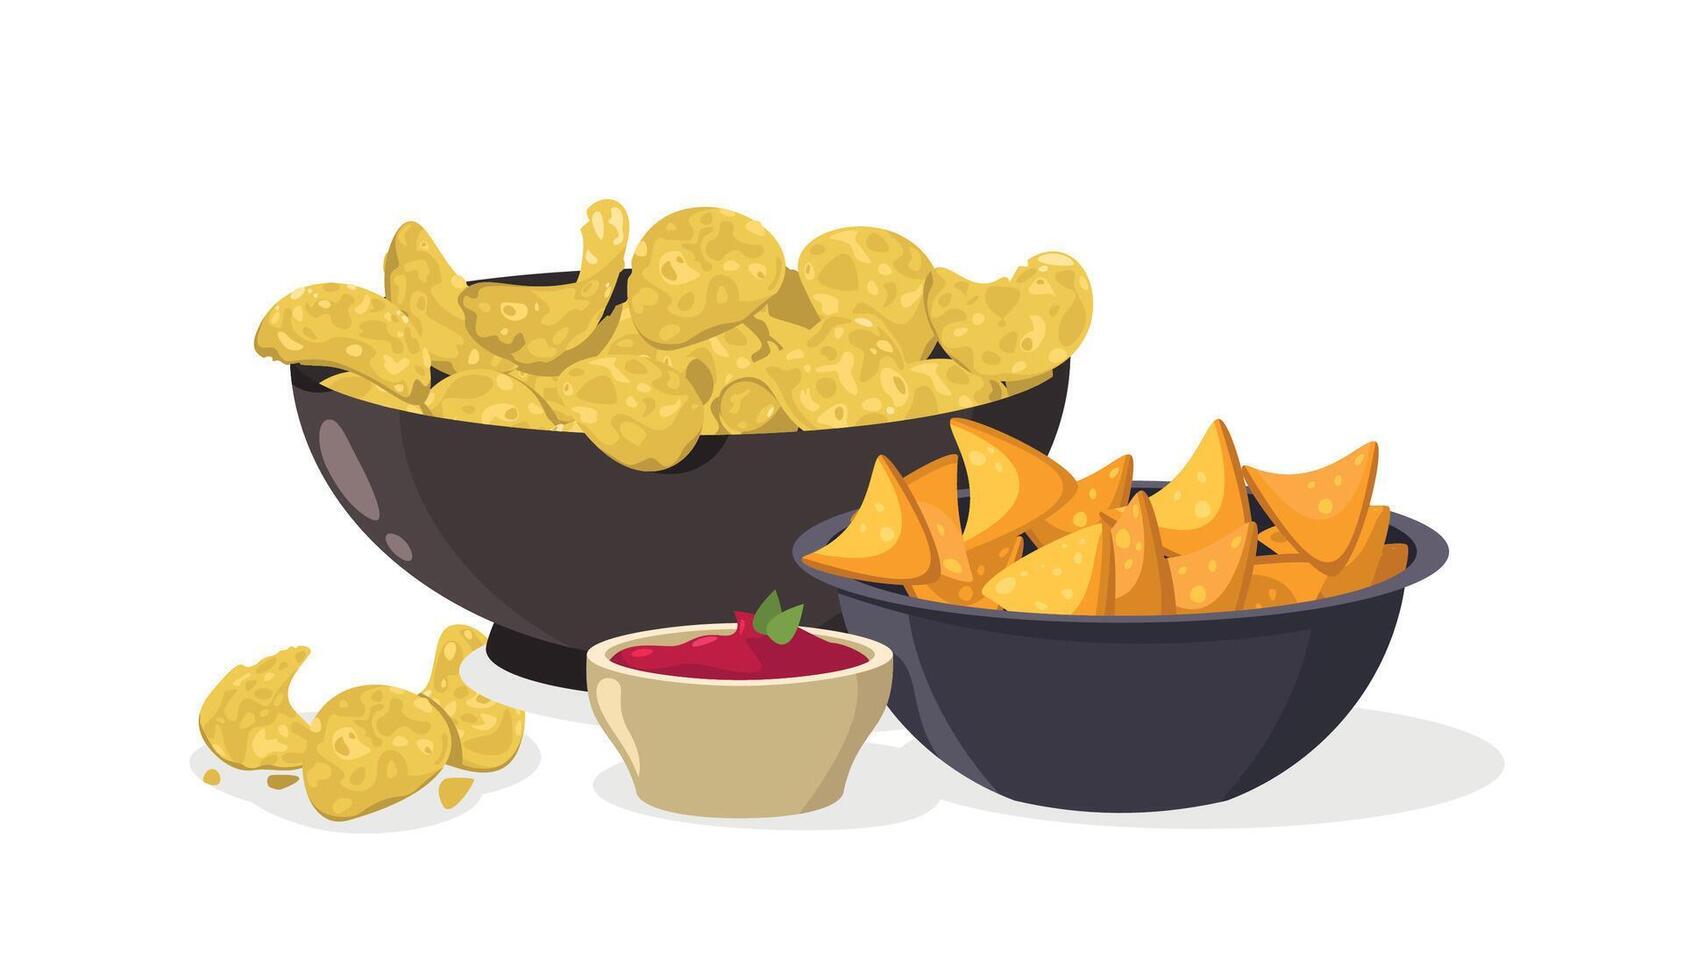 Cartoon chips in bowl. Yellow crispy fried potato snack in bowl, crunchy organic vegan product package. Vector vegetarian crispy fried potato snack